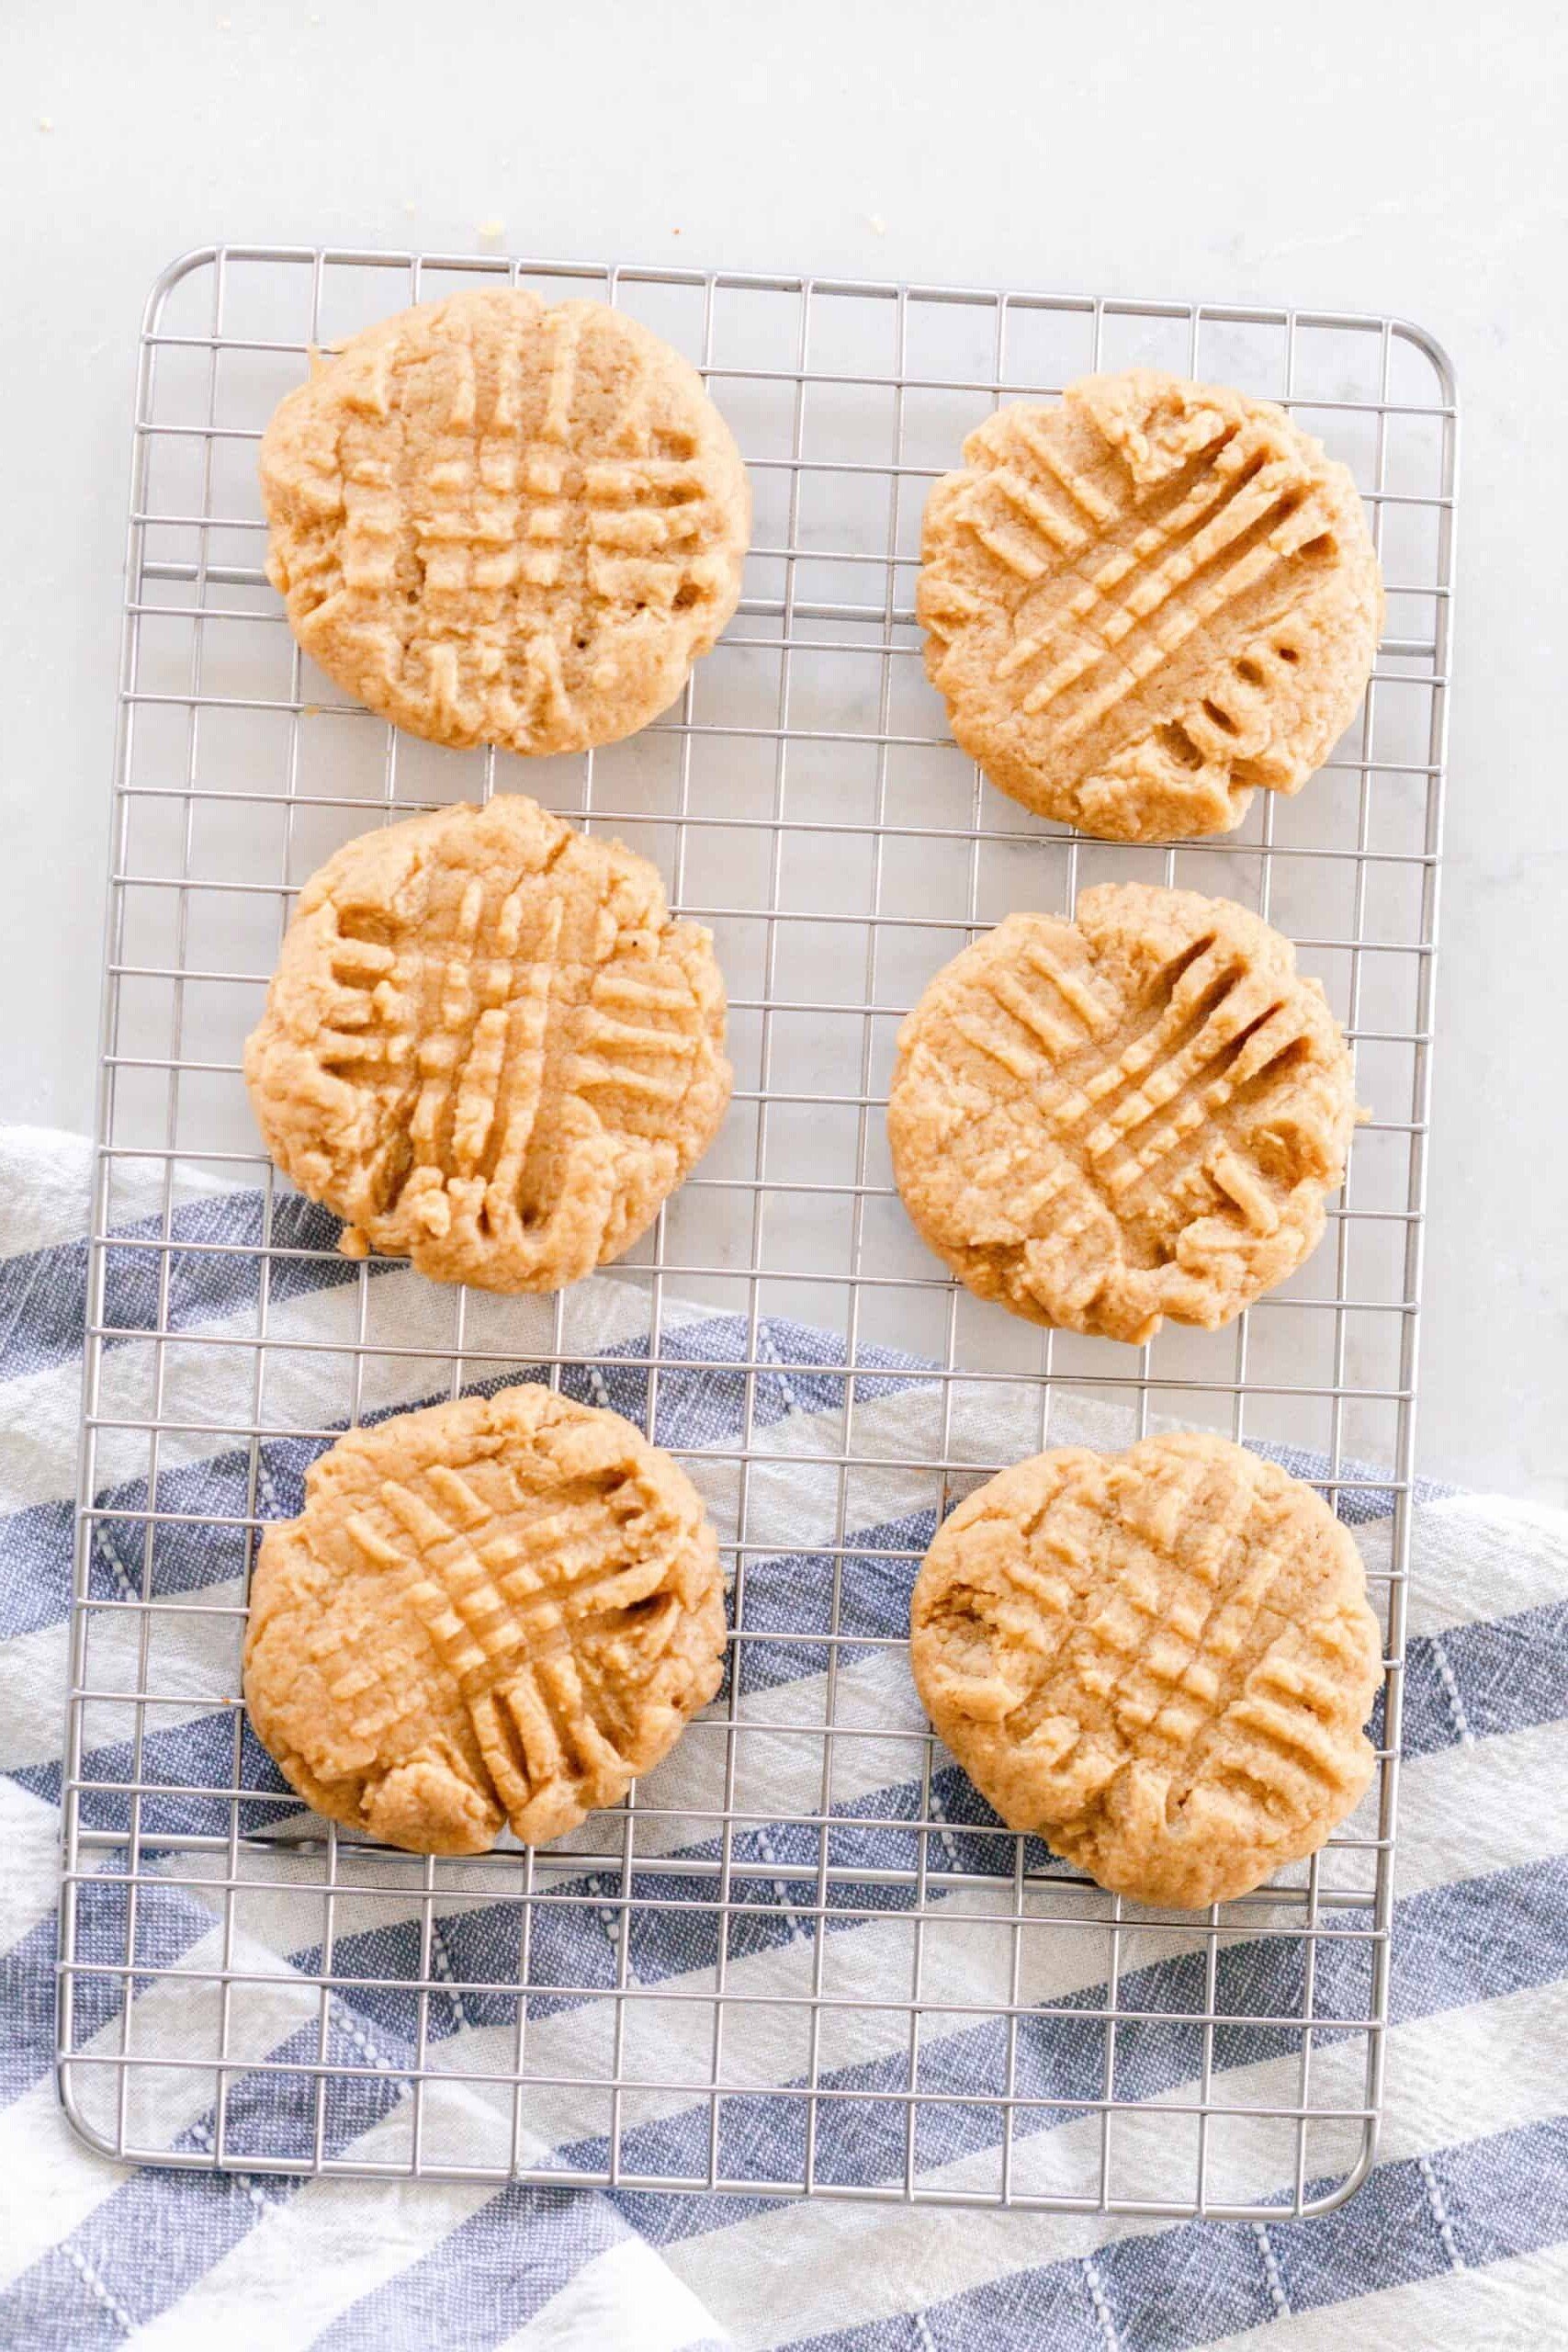 Easy Peanut Butter Cookies Recipe